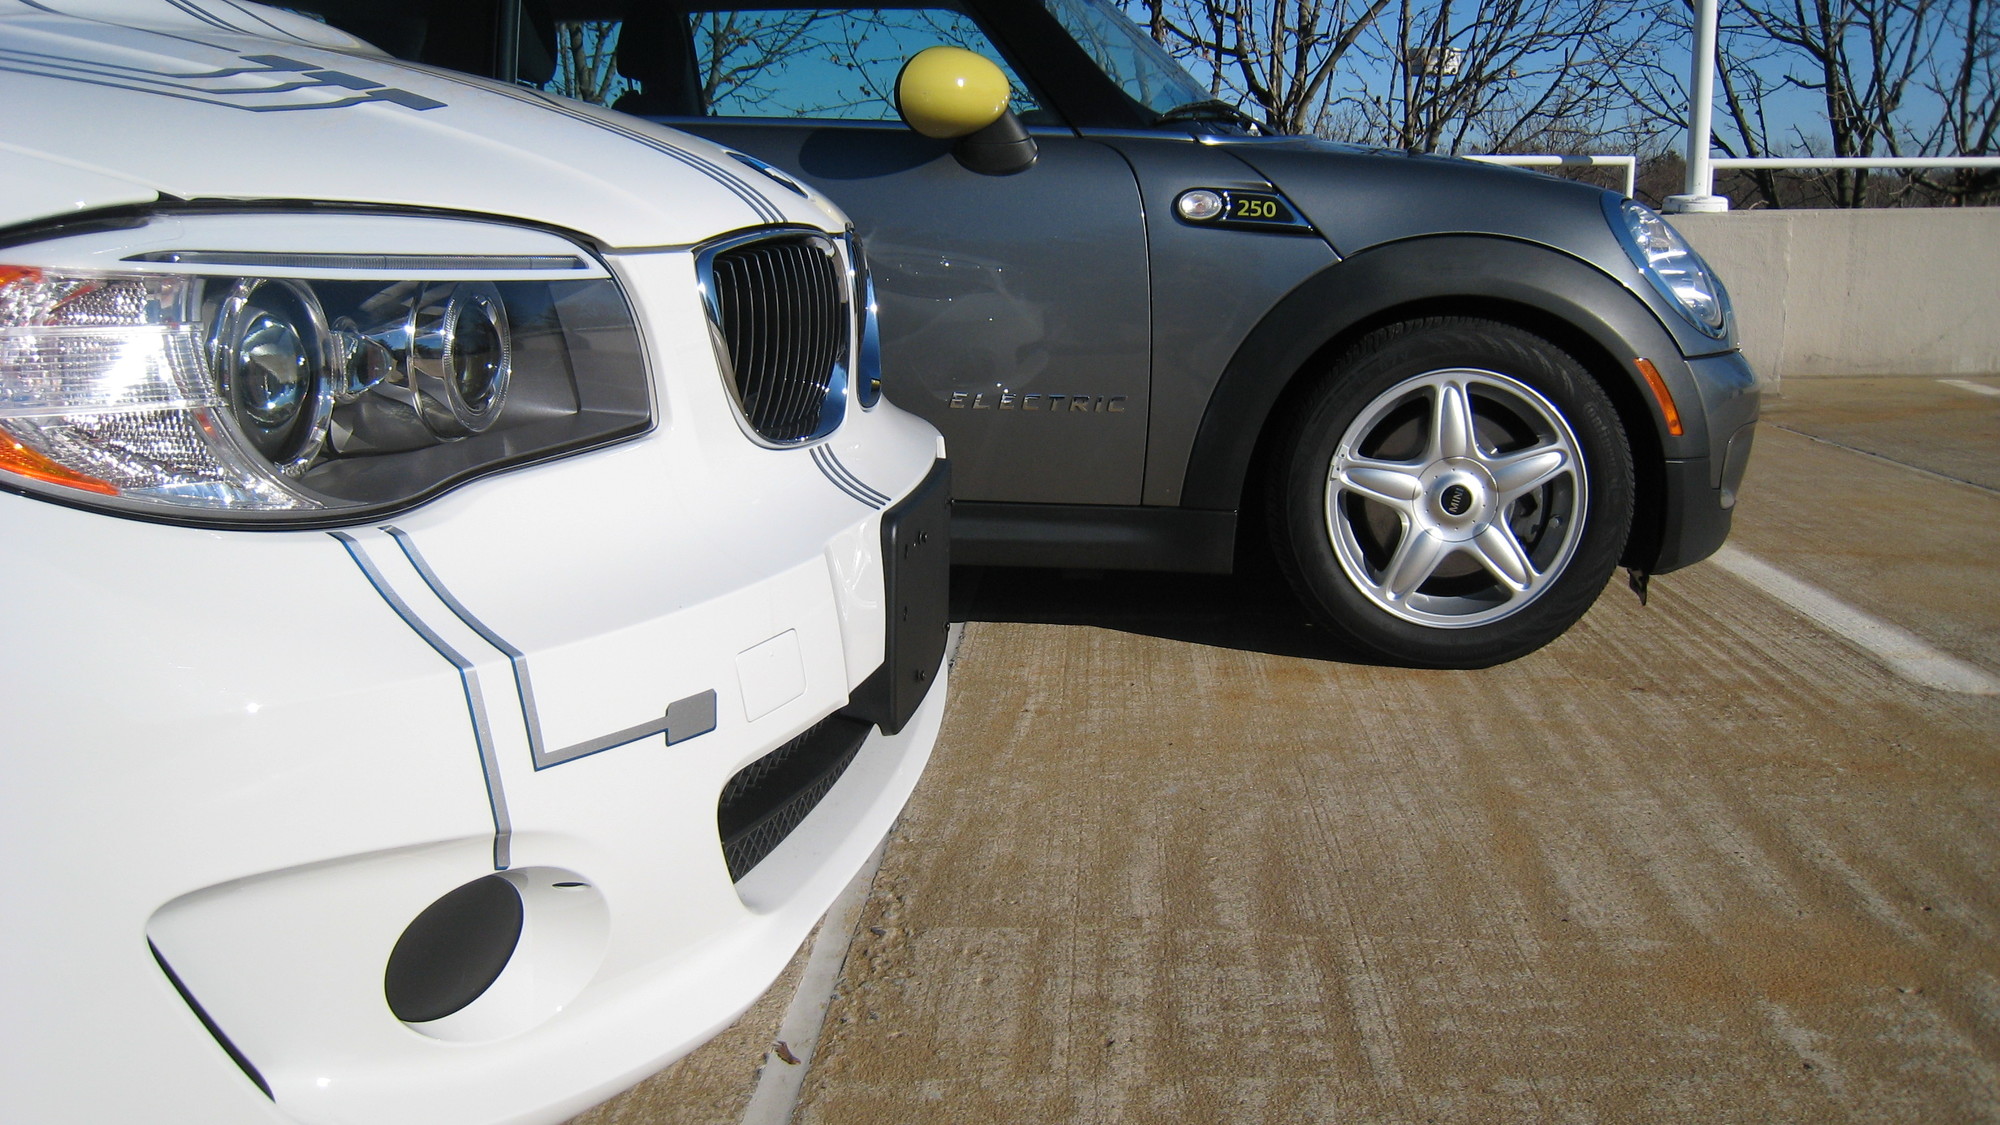 Mini E and BMW ActiveE electric cars, New Jersey, Dec 2011 (photos: Tom Moloughney)